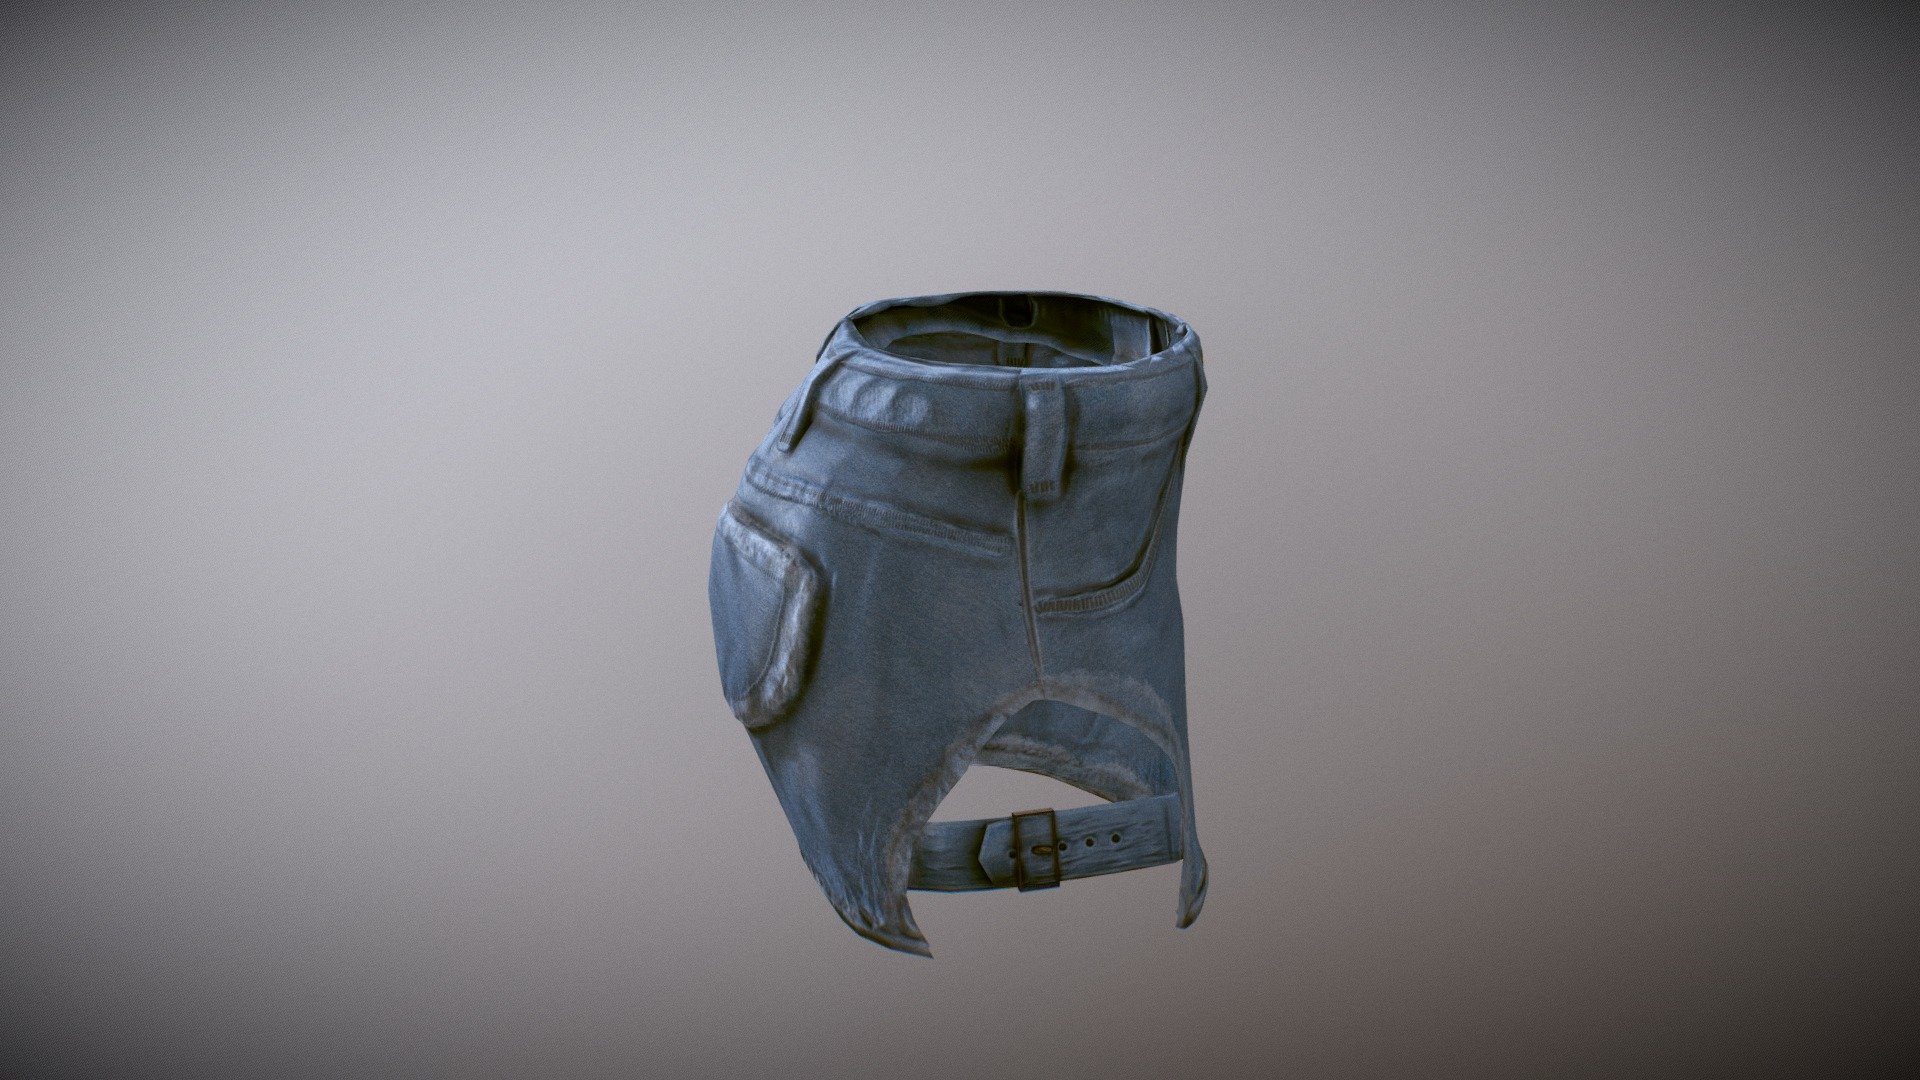 Low poly model of jeans shorts - jeans shorts - 3D model by hawkeyebit 3d model